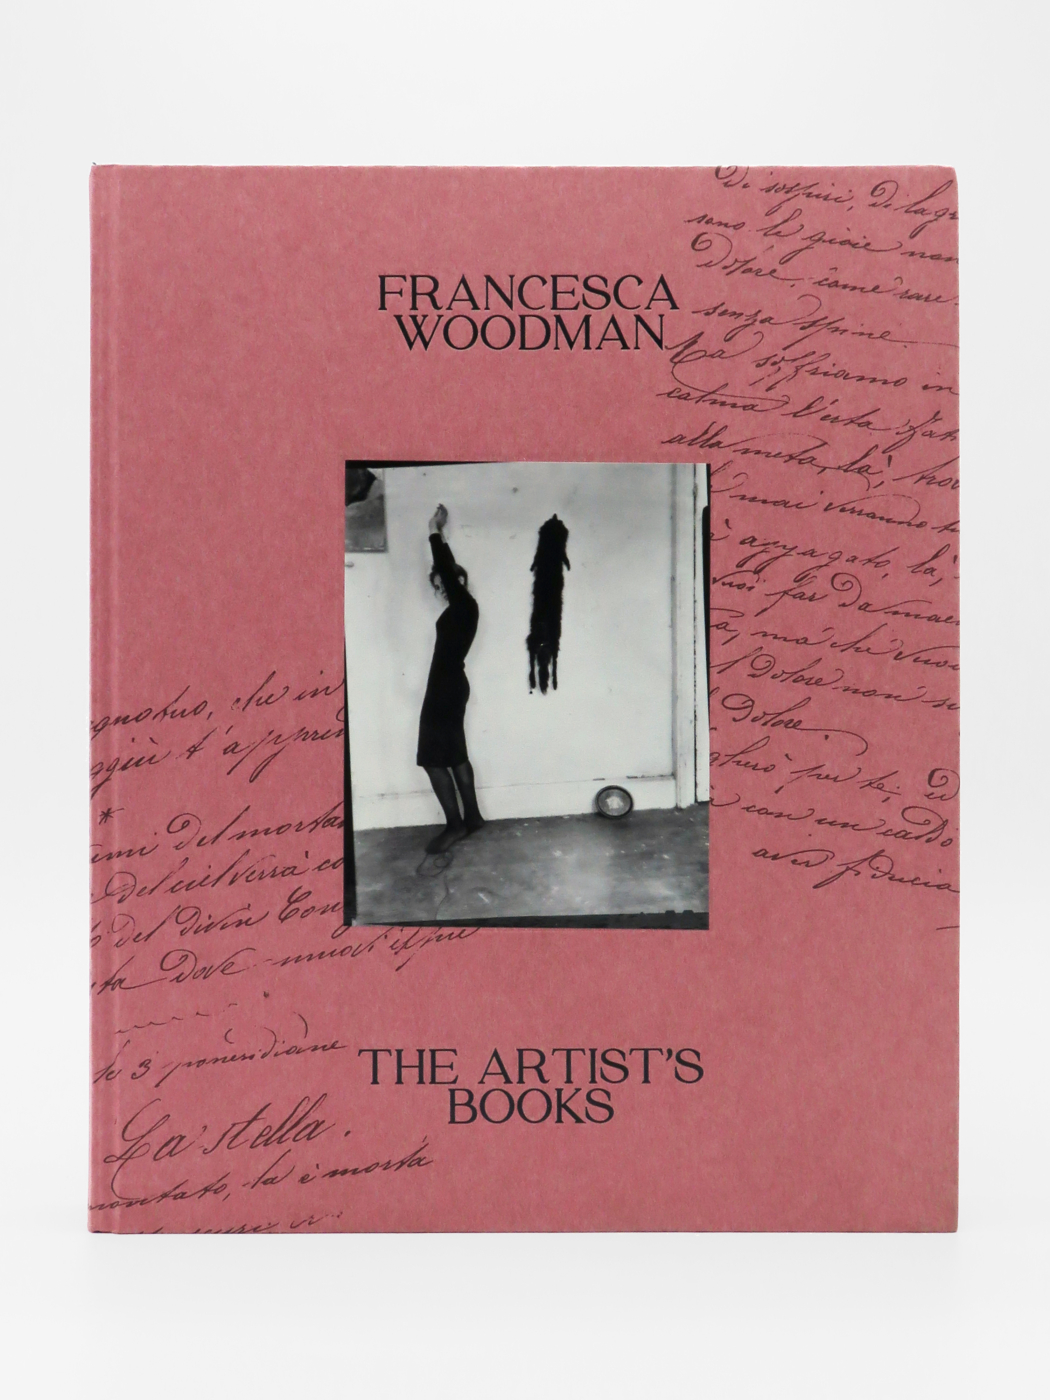 Francesca Woodman, The Artist's Books